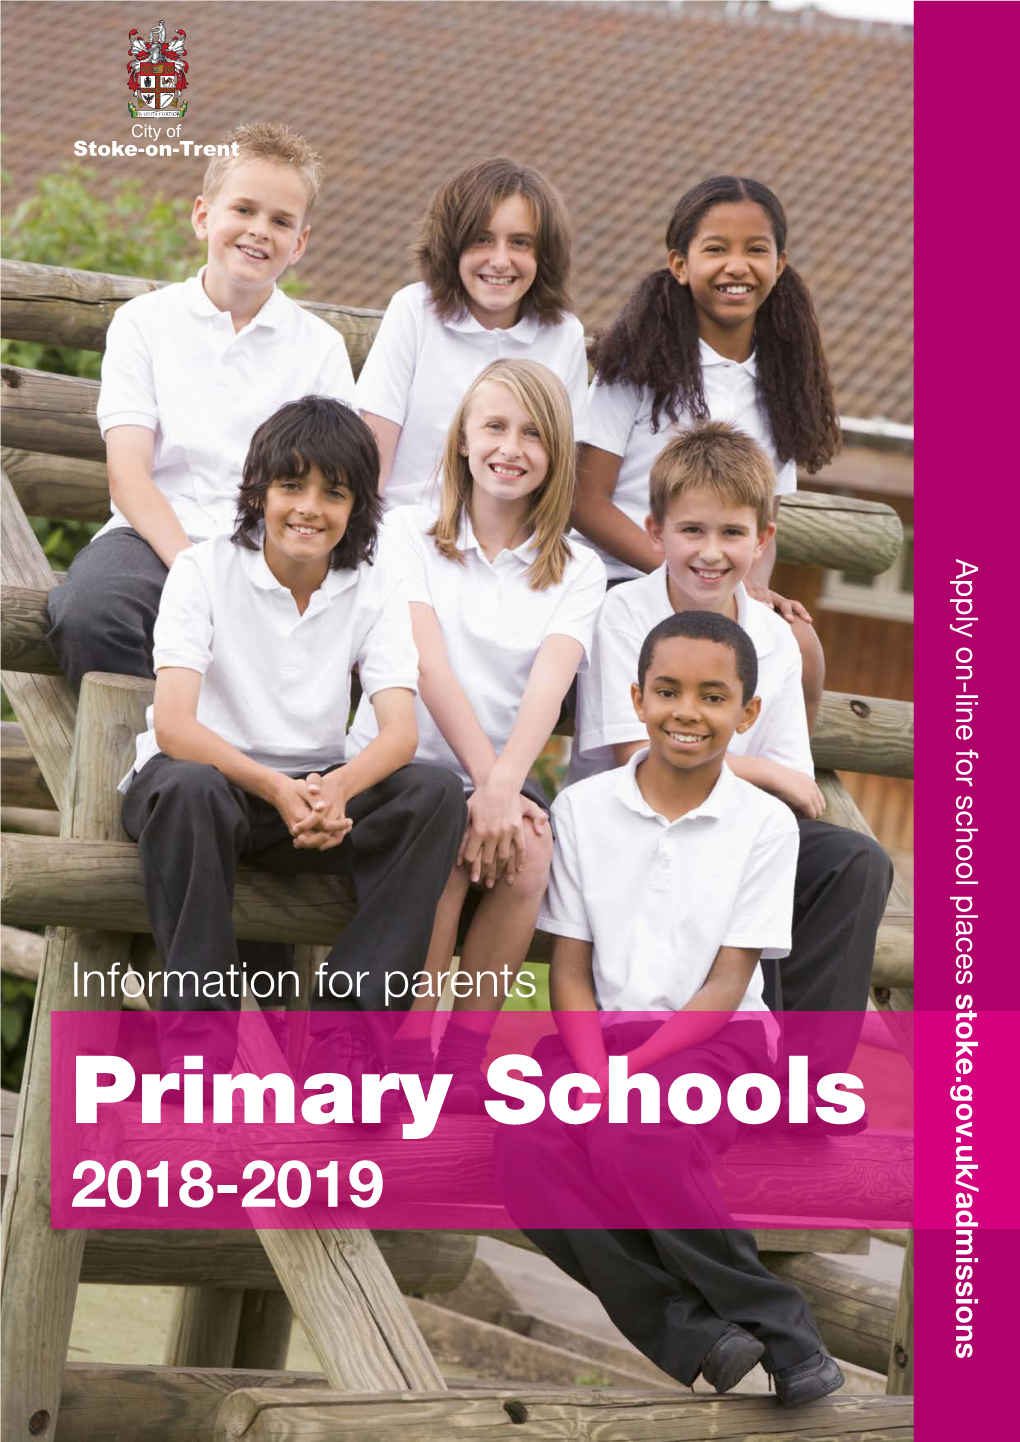 Primary Schools 2018-2019 Introduction